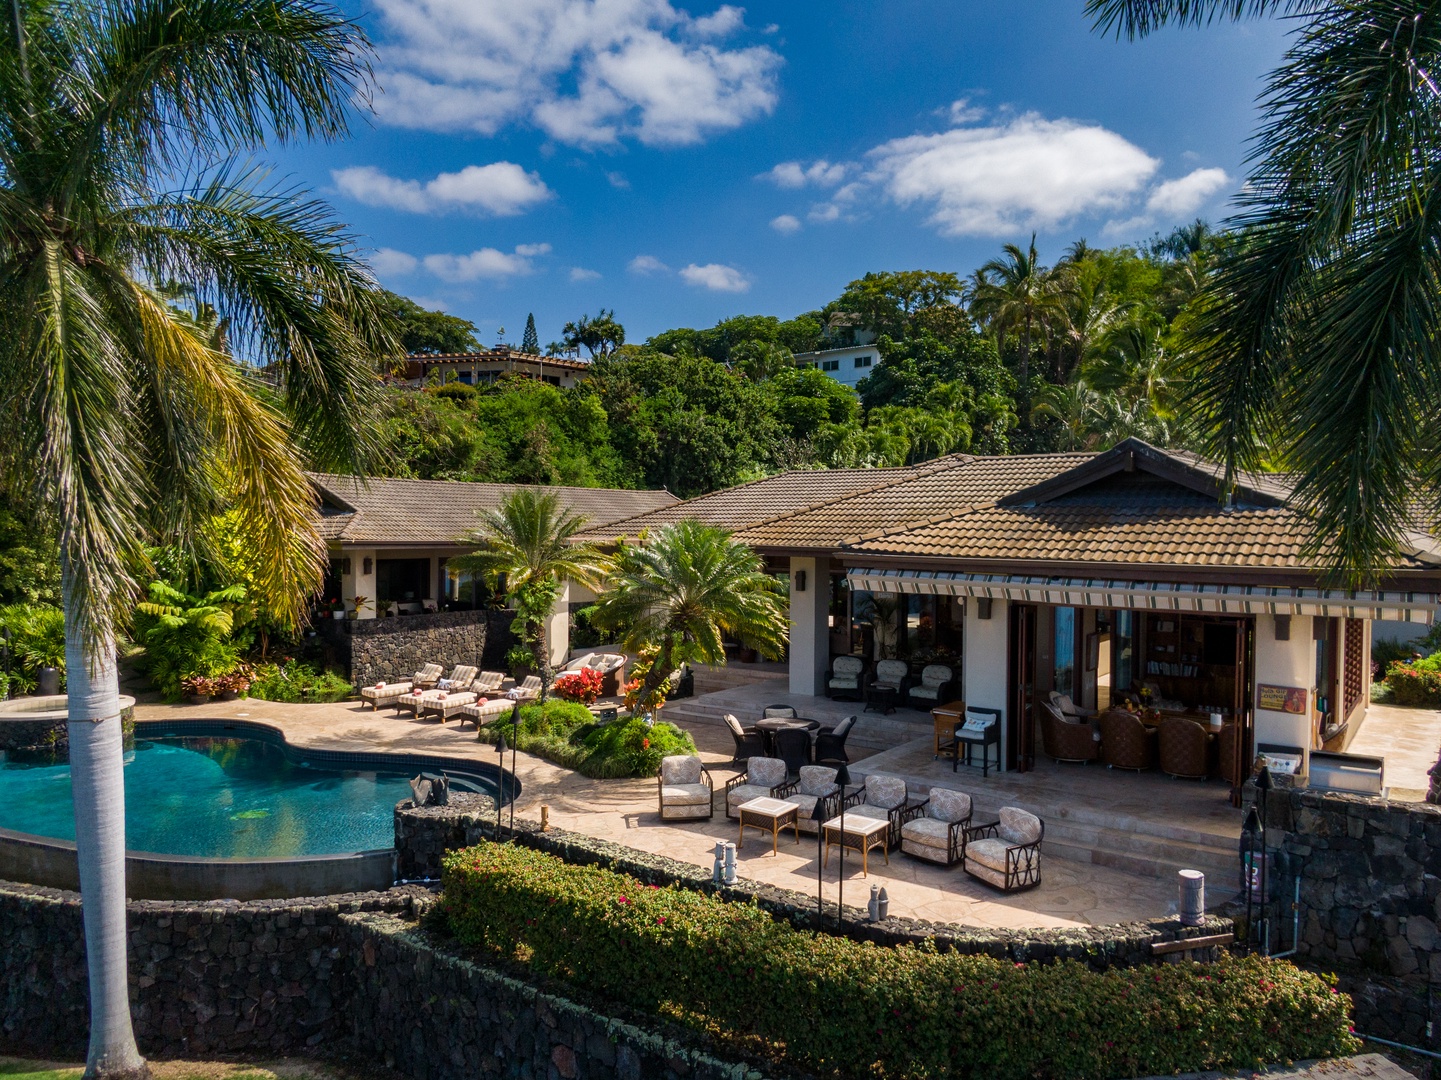 Kailua Kona Vacation Rentals, Hale Wailele** - Resort-style furnishings surrounding the custom infinity edge pool